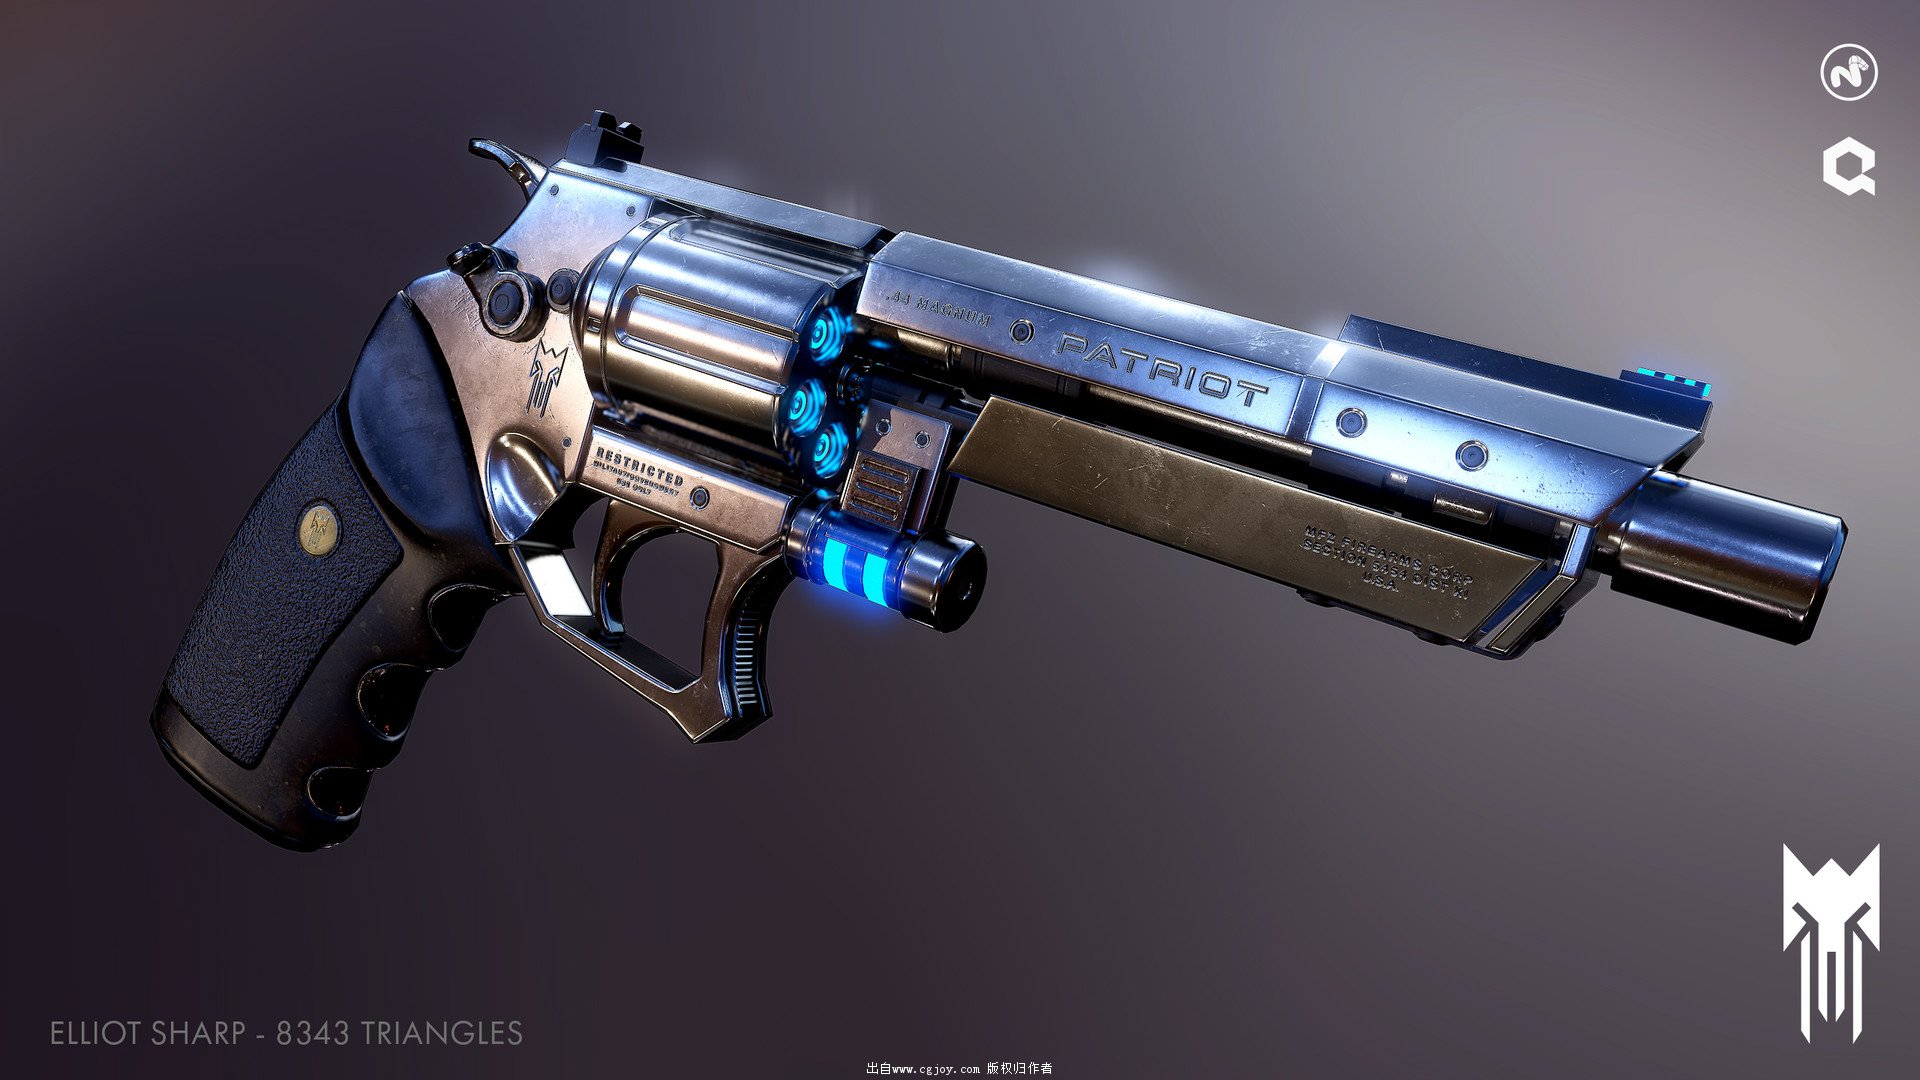 elliot-sharp-elliotsharp-scifi-revolver-01.jpg